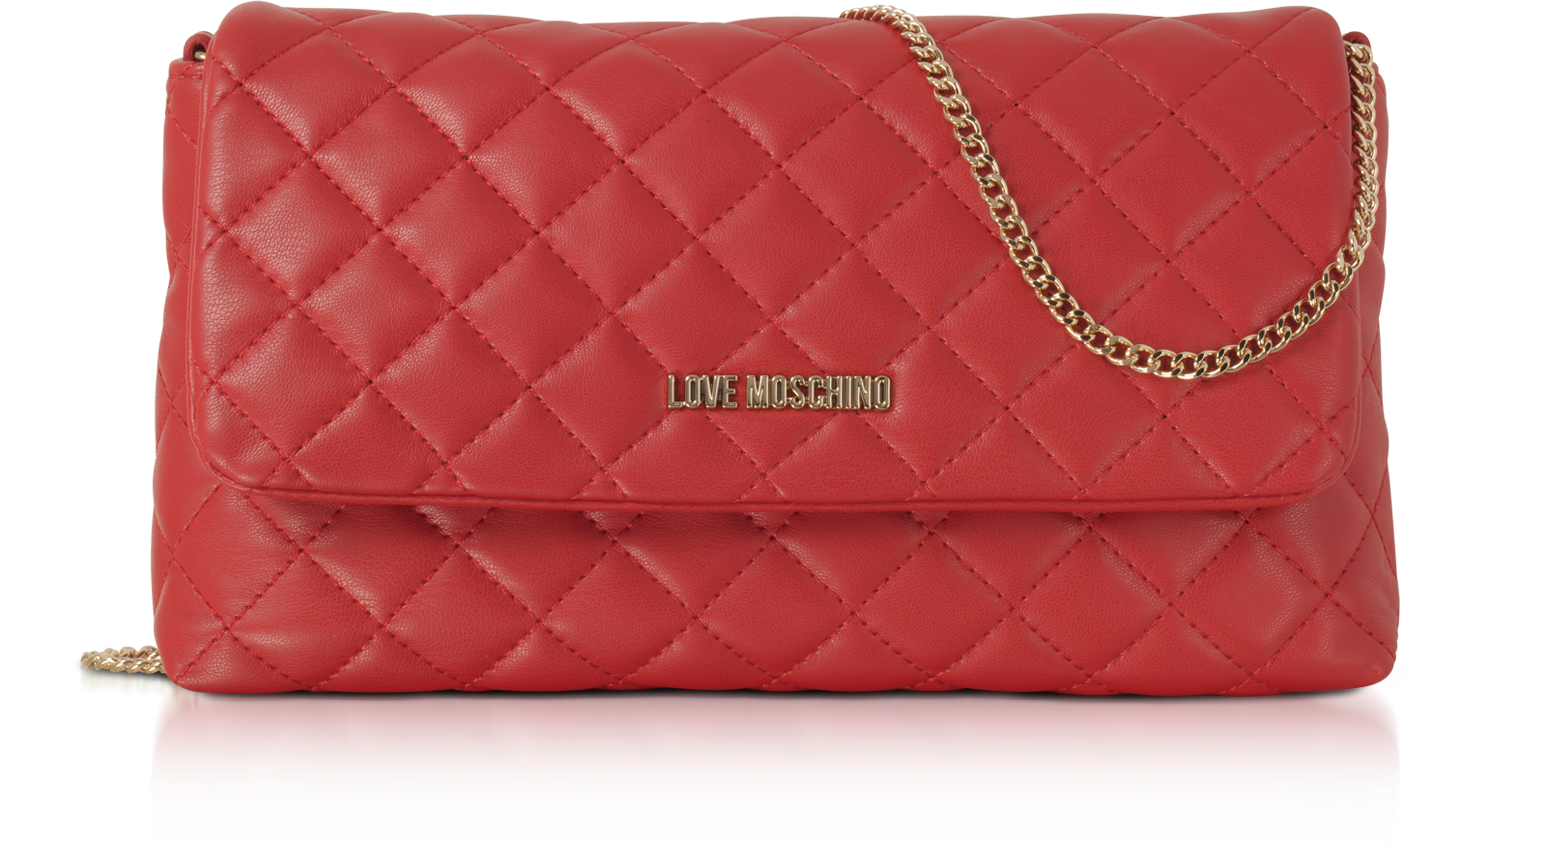 moschino red crossbody bag